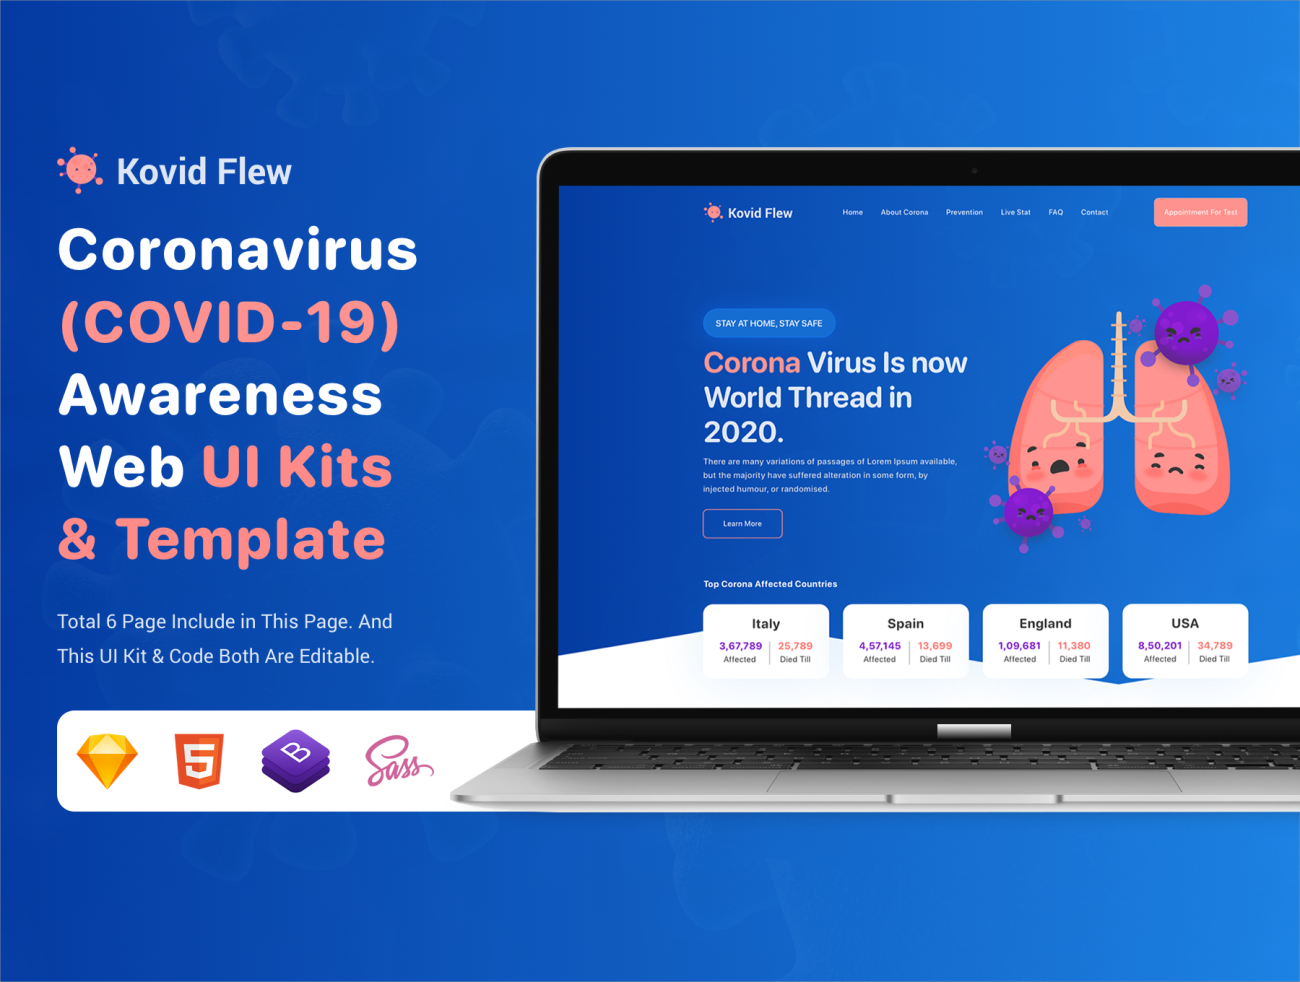 Kovid Flew - Coronavirus Awareness 冠状病毒防范意识web kit模板-UI/UX-到位啦UI